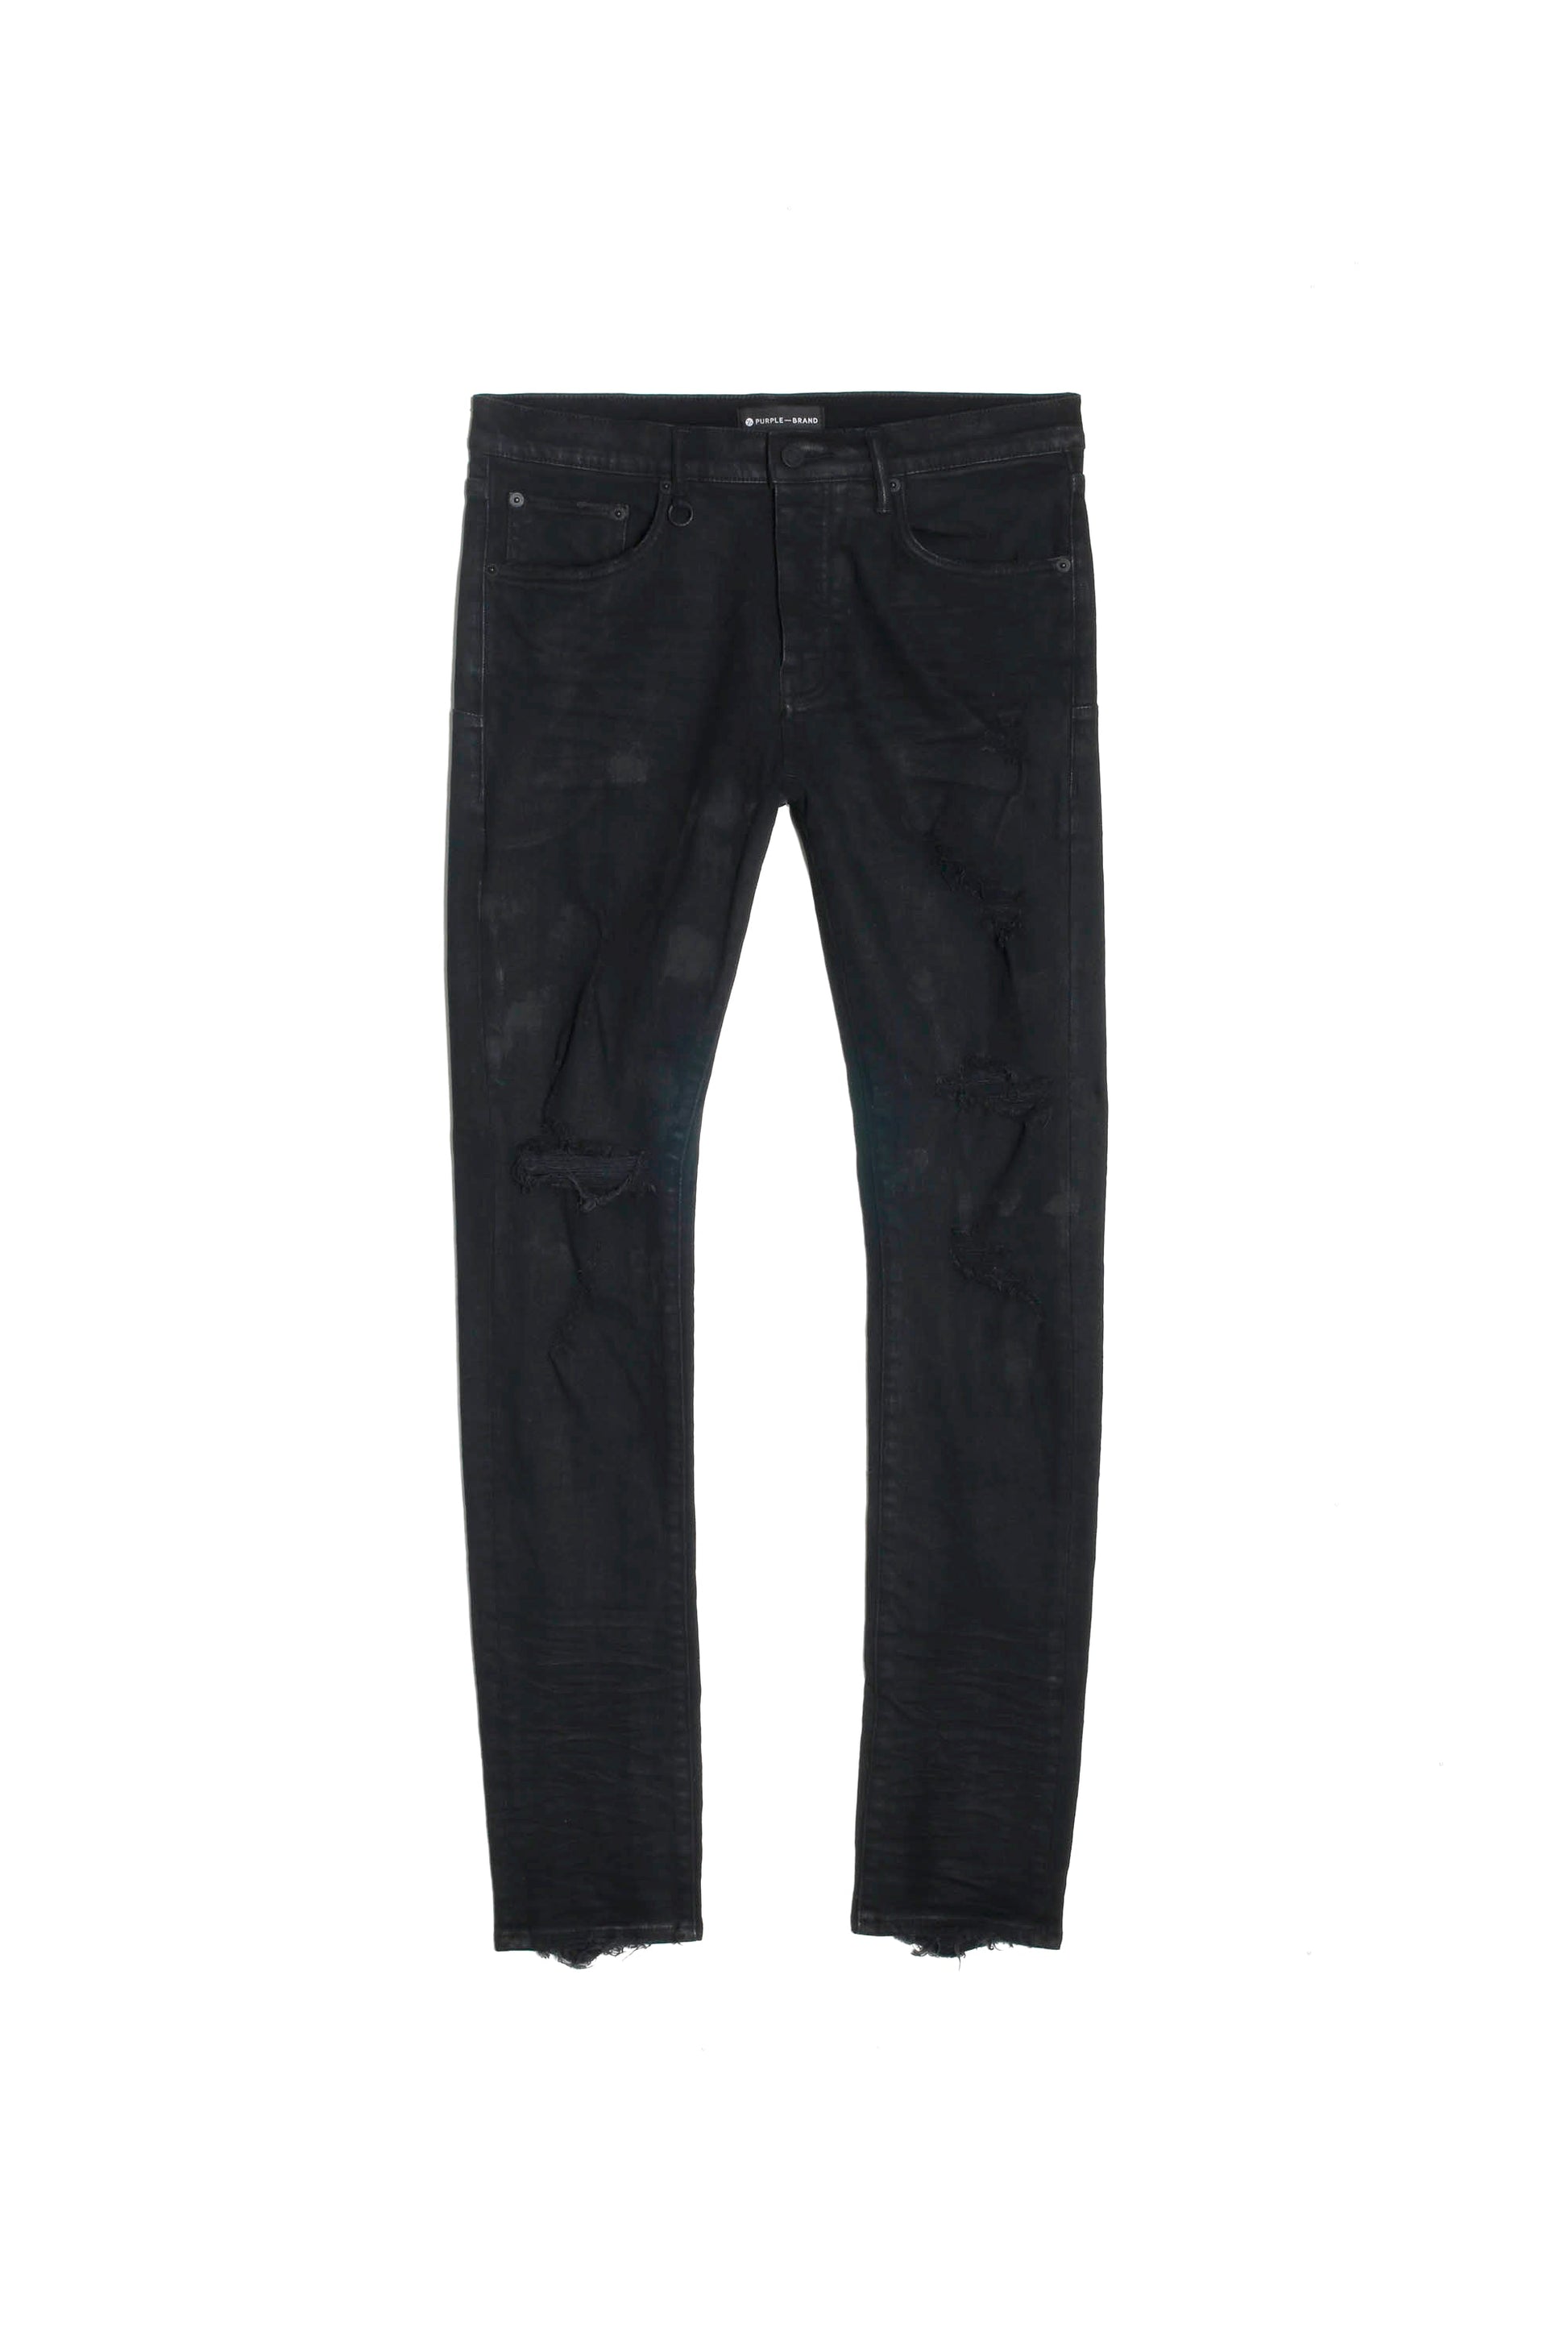 Purple Brand Men's P001 Low Rise Skinny Jeans